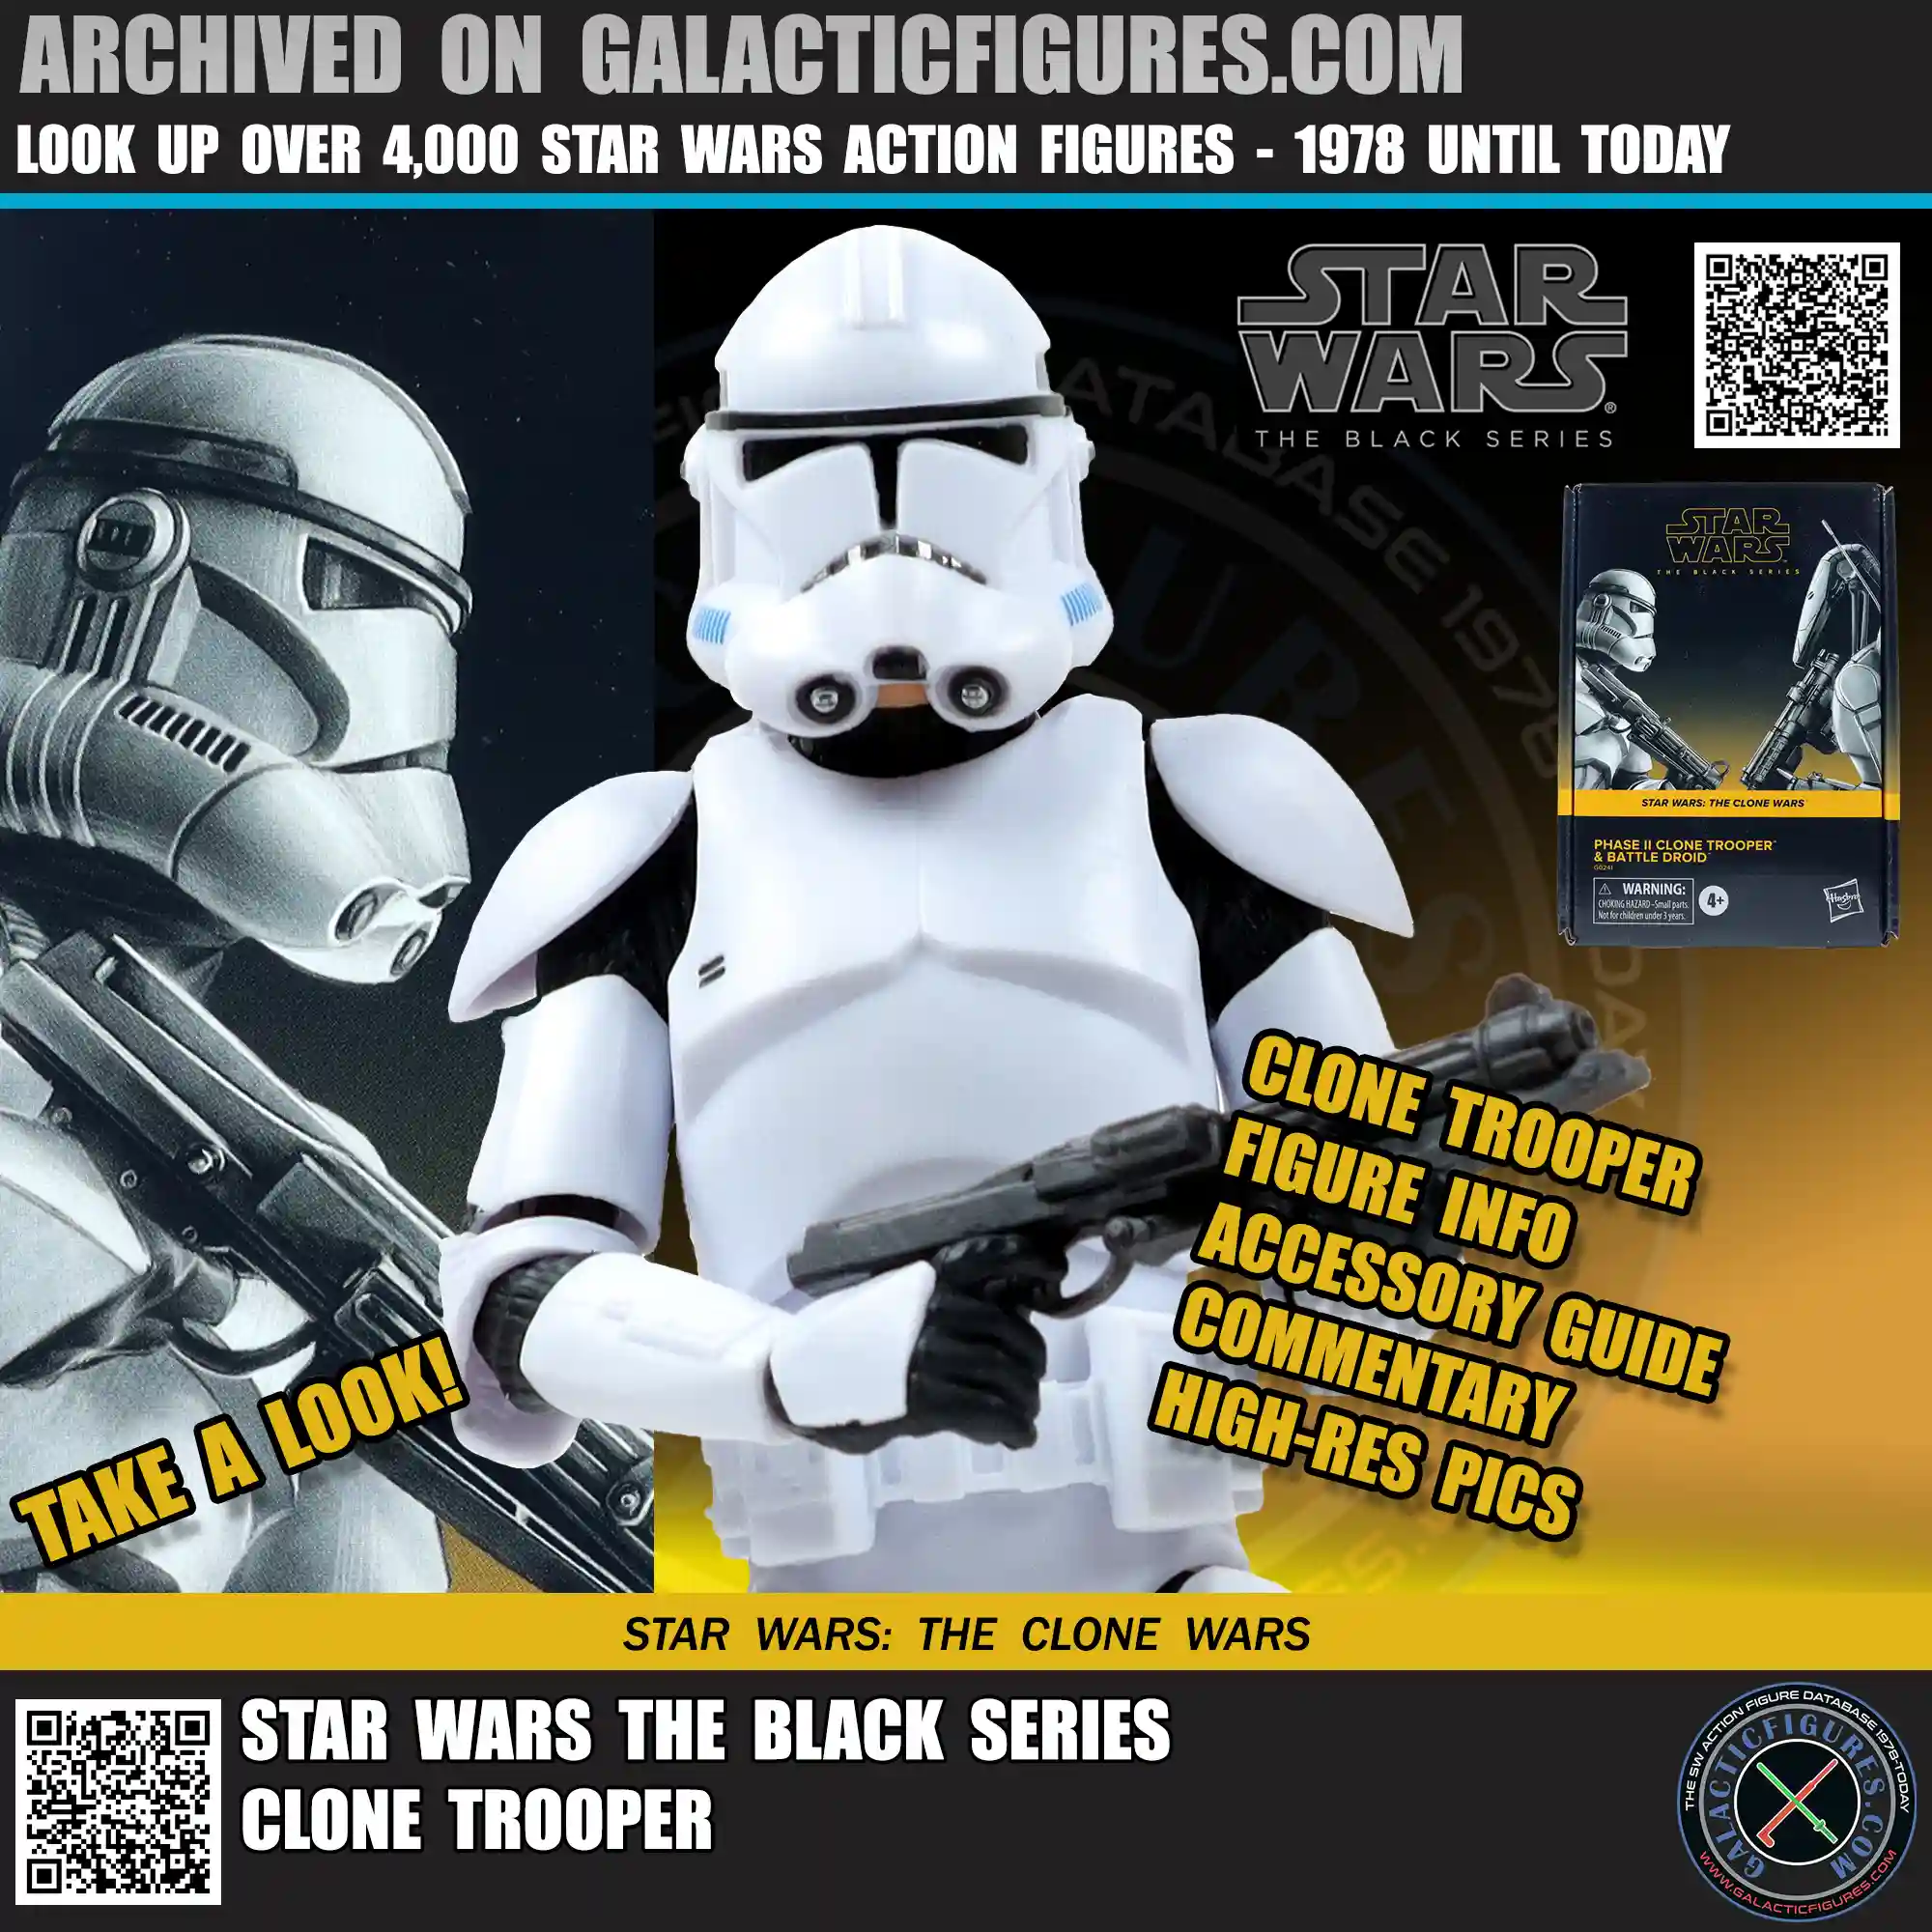 Black Series Clone Trooper Added